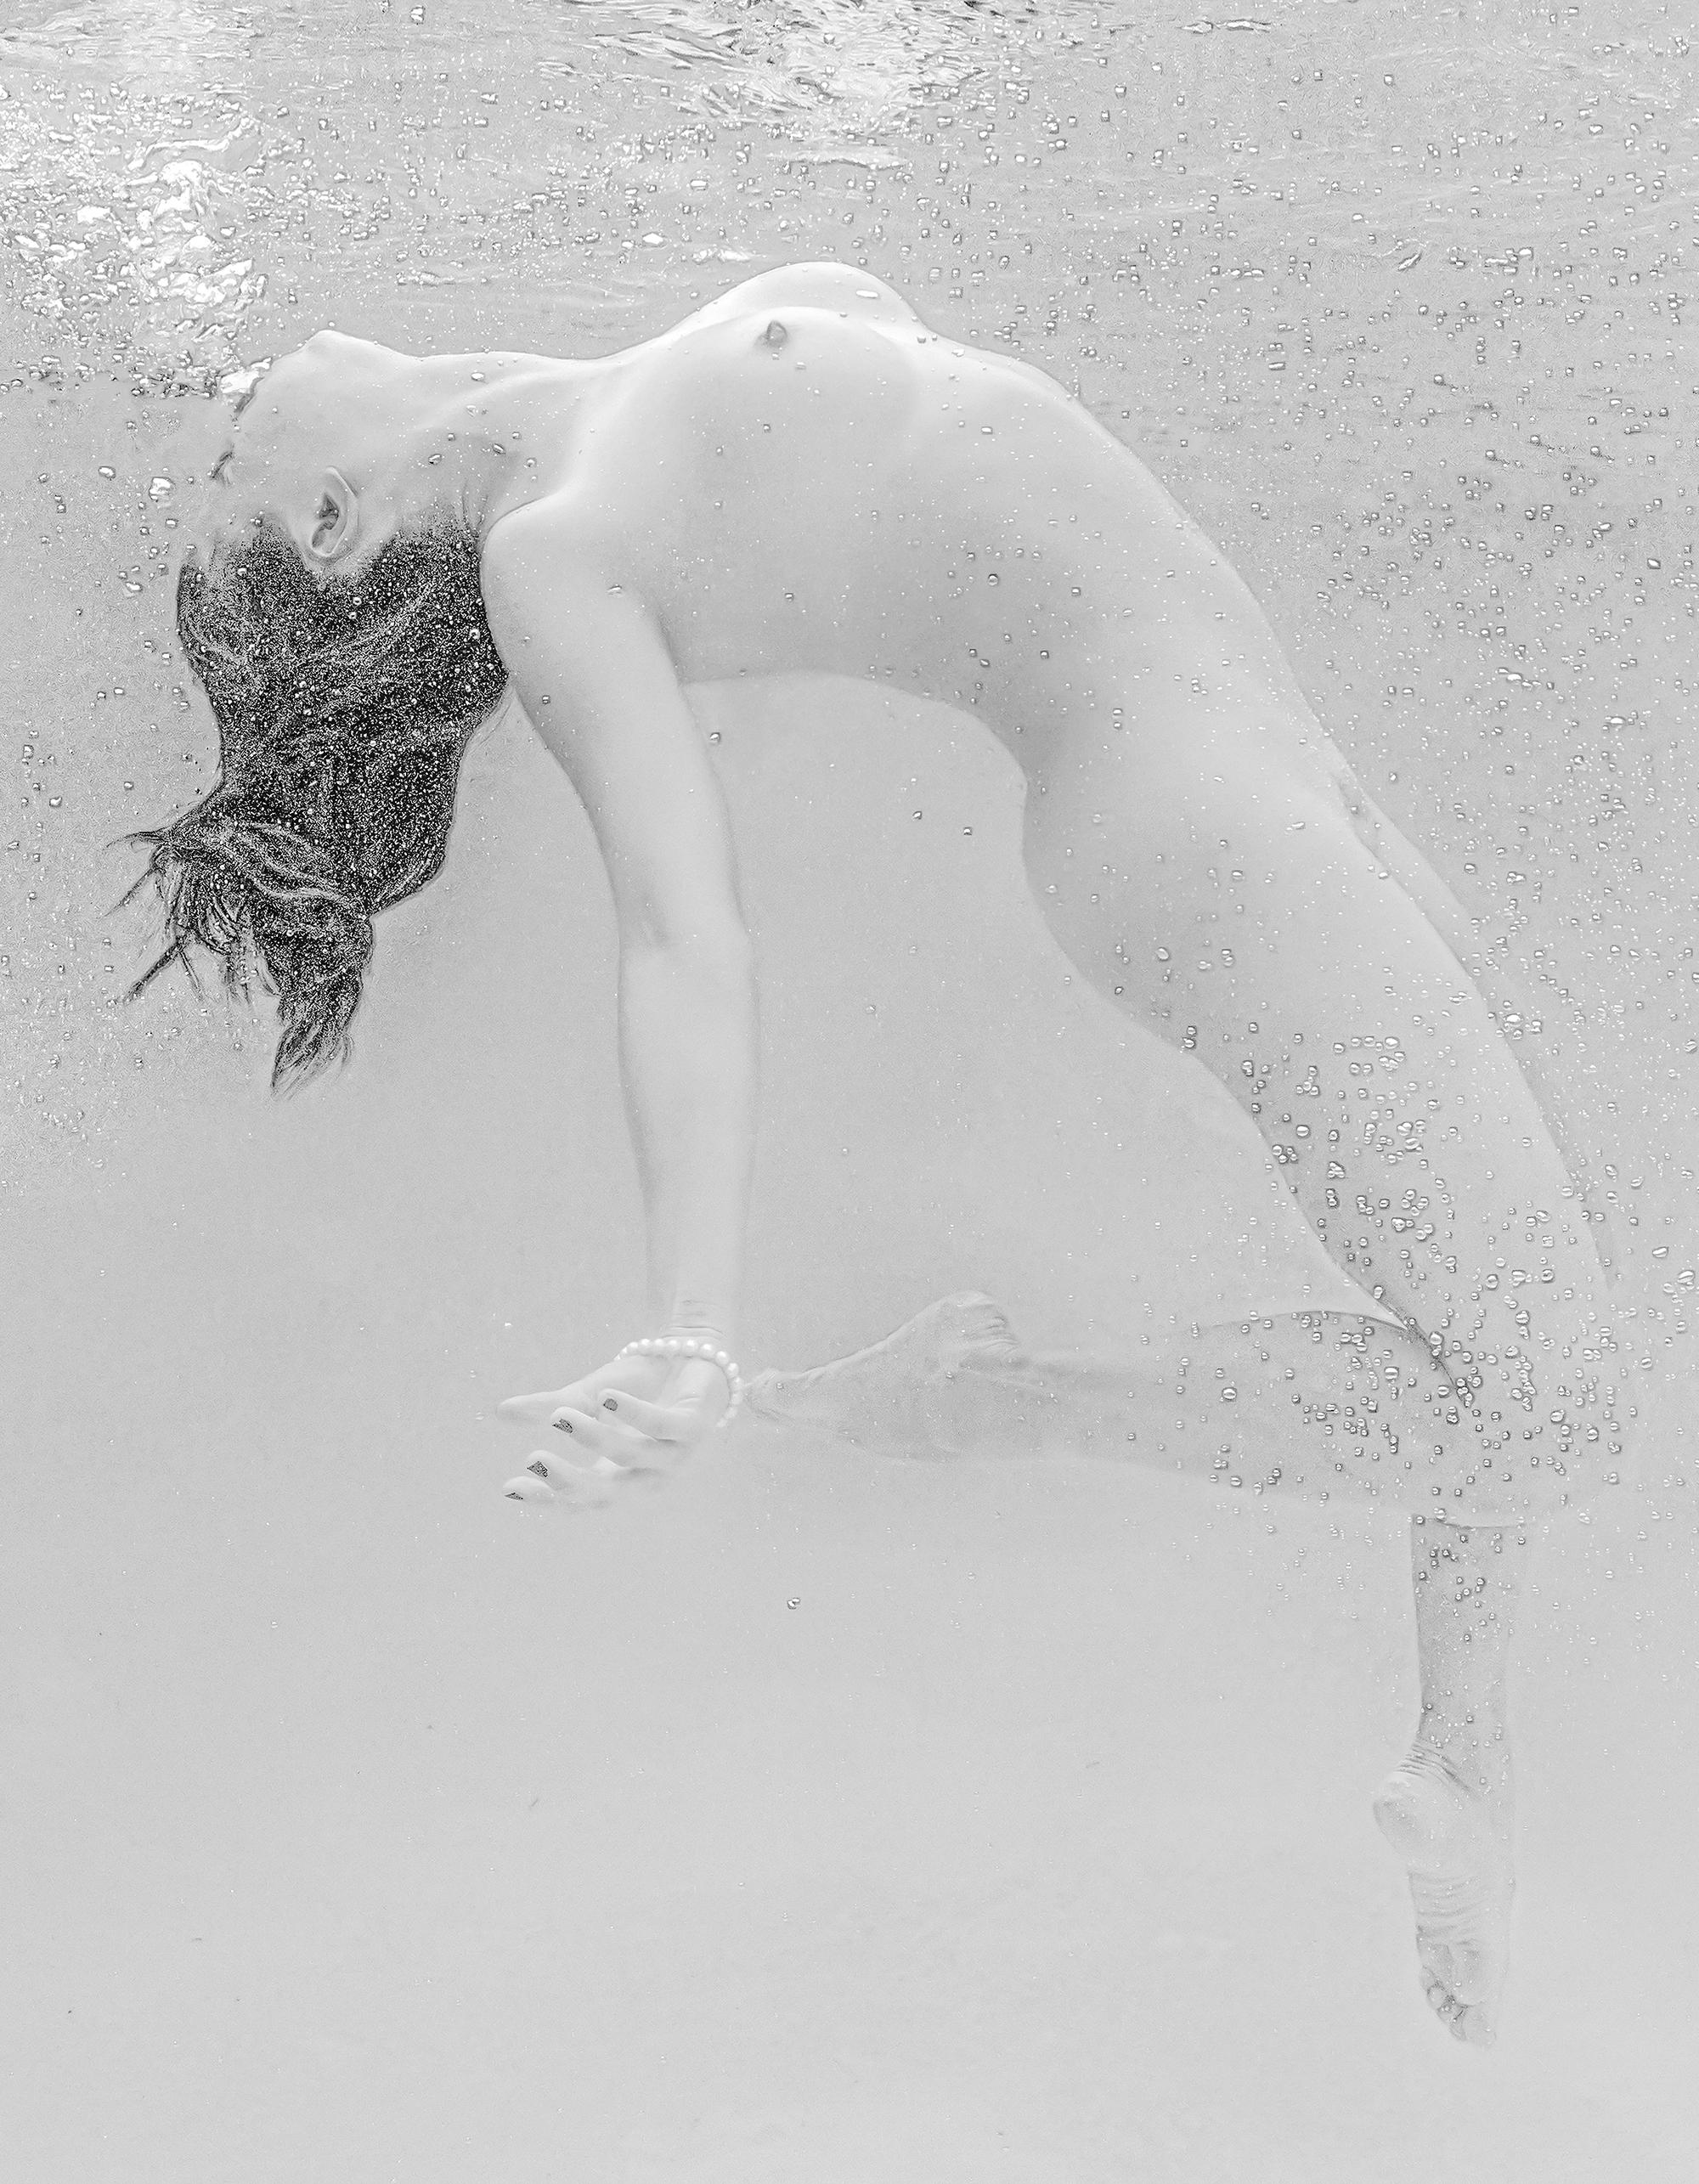 Soft Dance - underwater black & white nude photograph - archival pigment 35